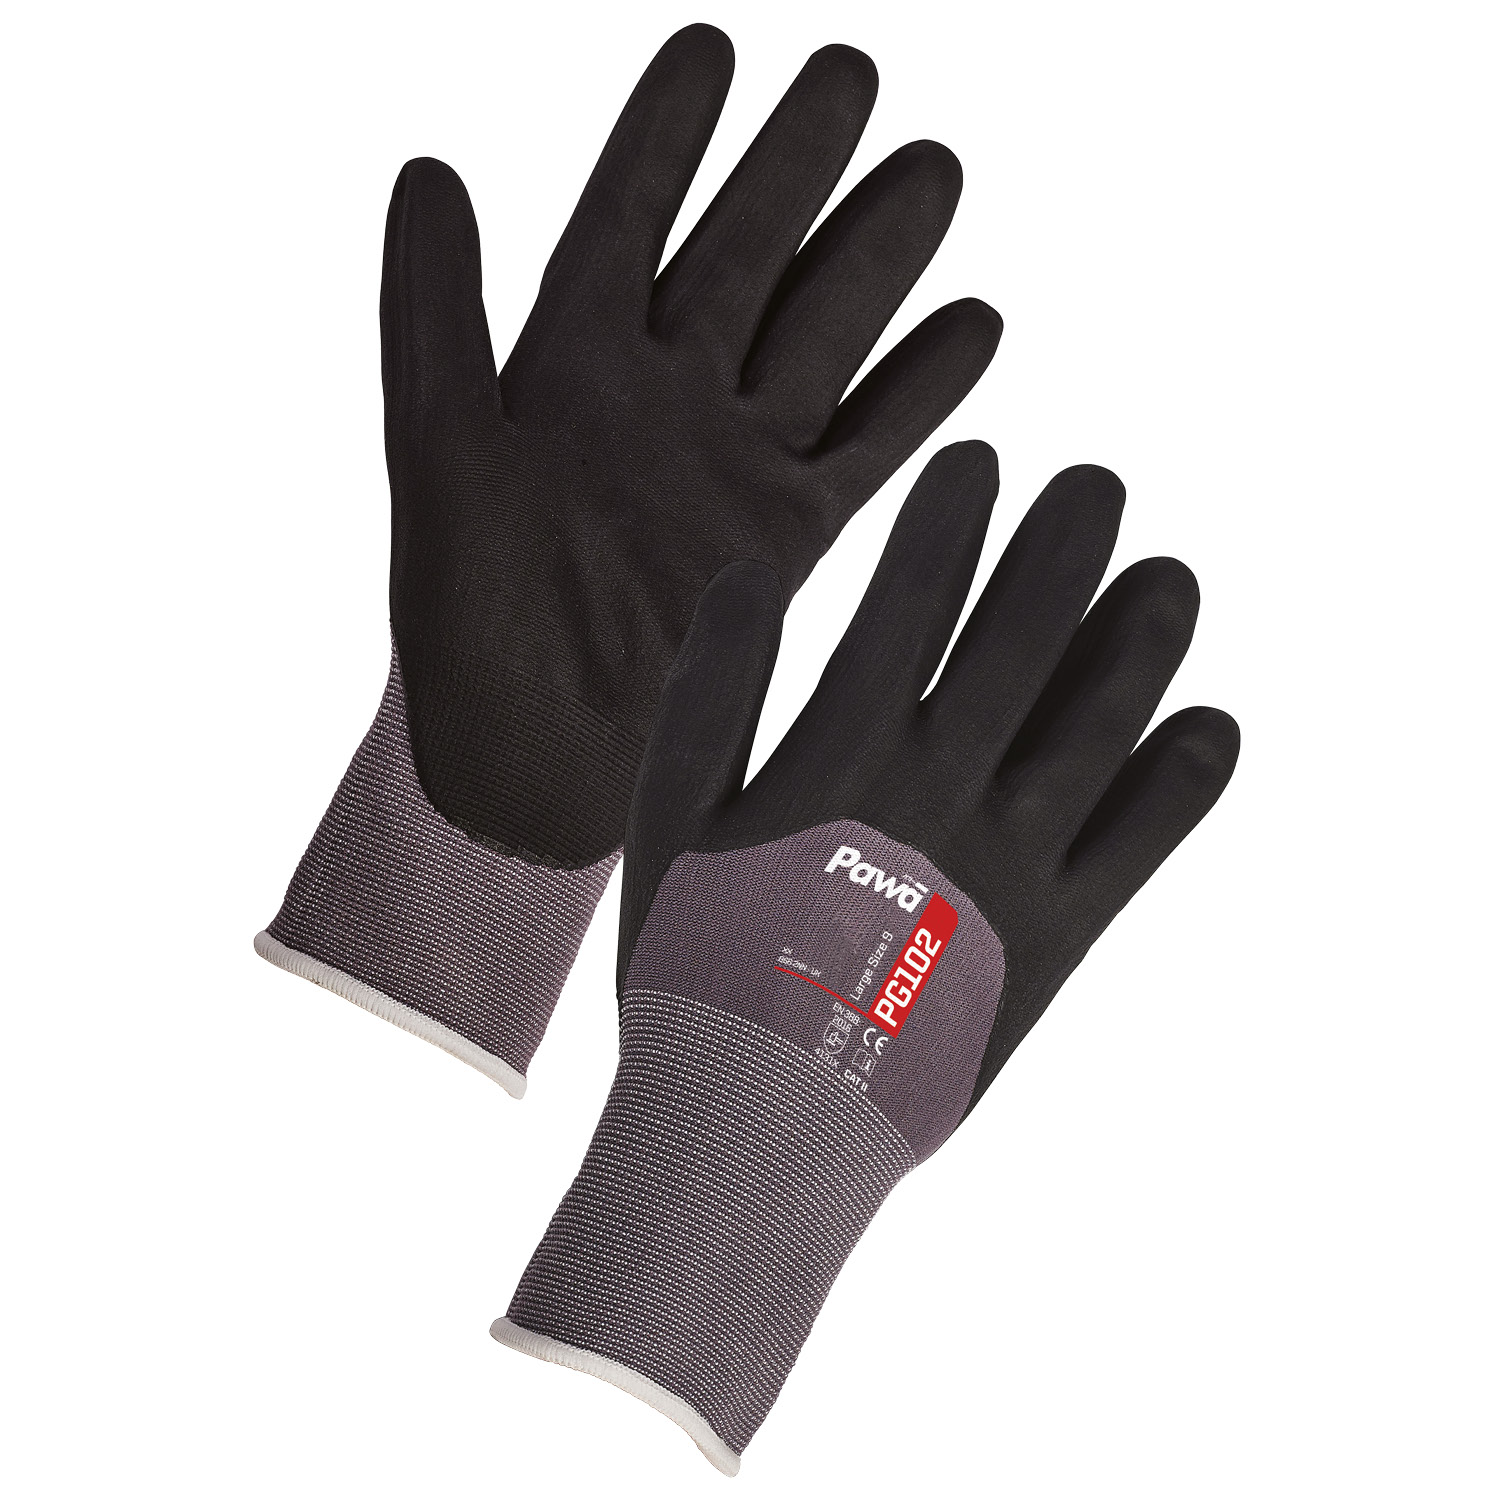 Pawa Gloves 102 - Medium